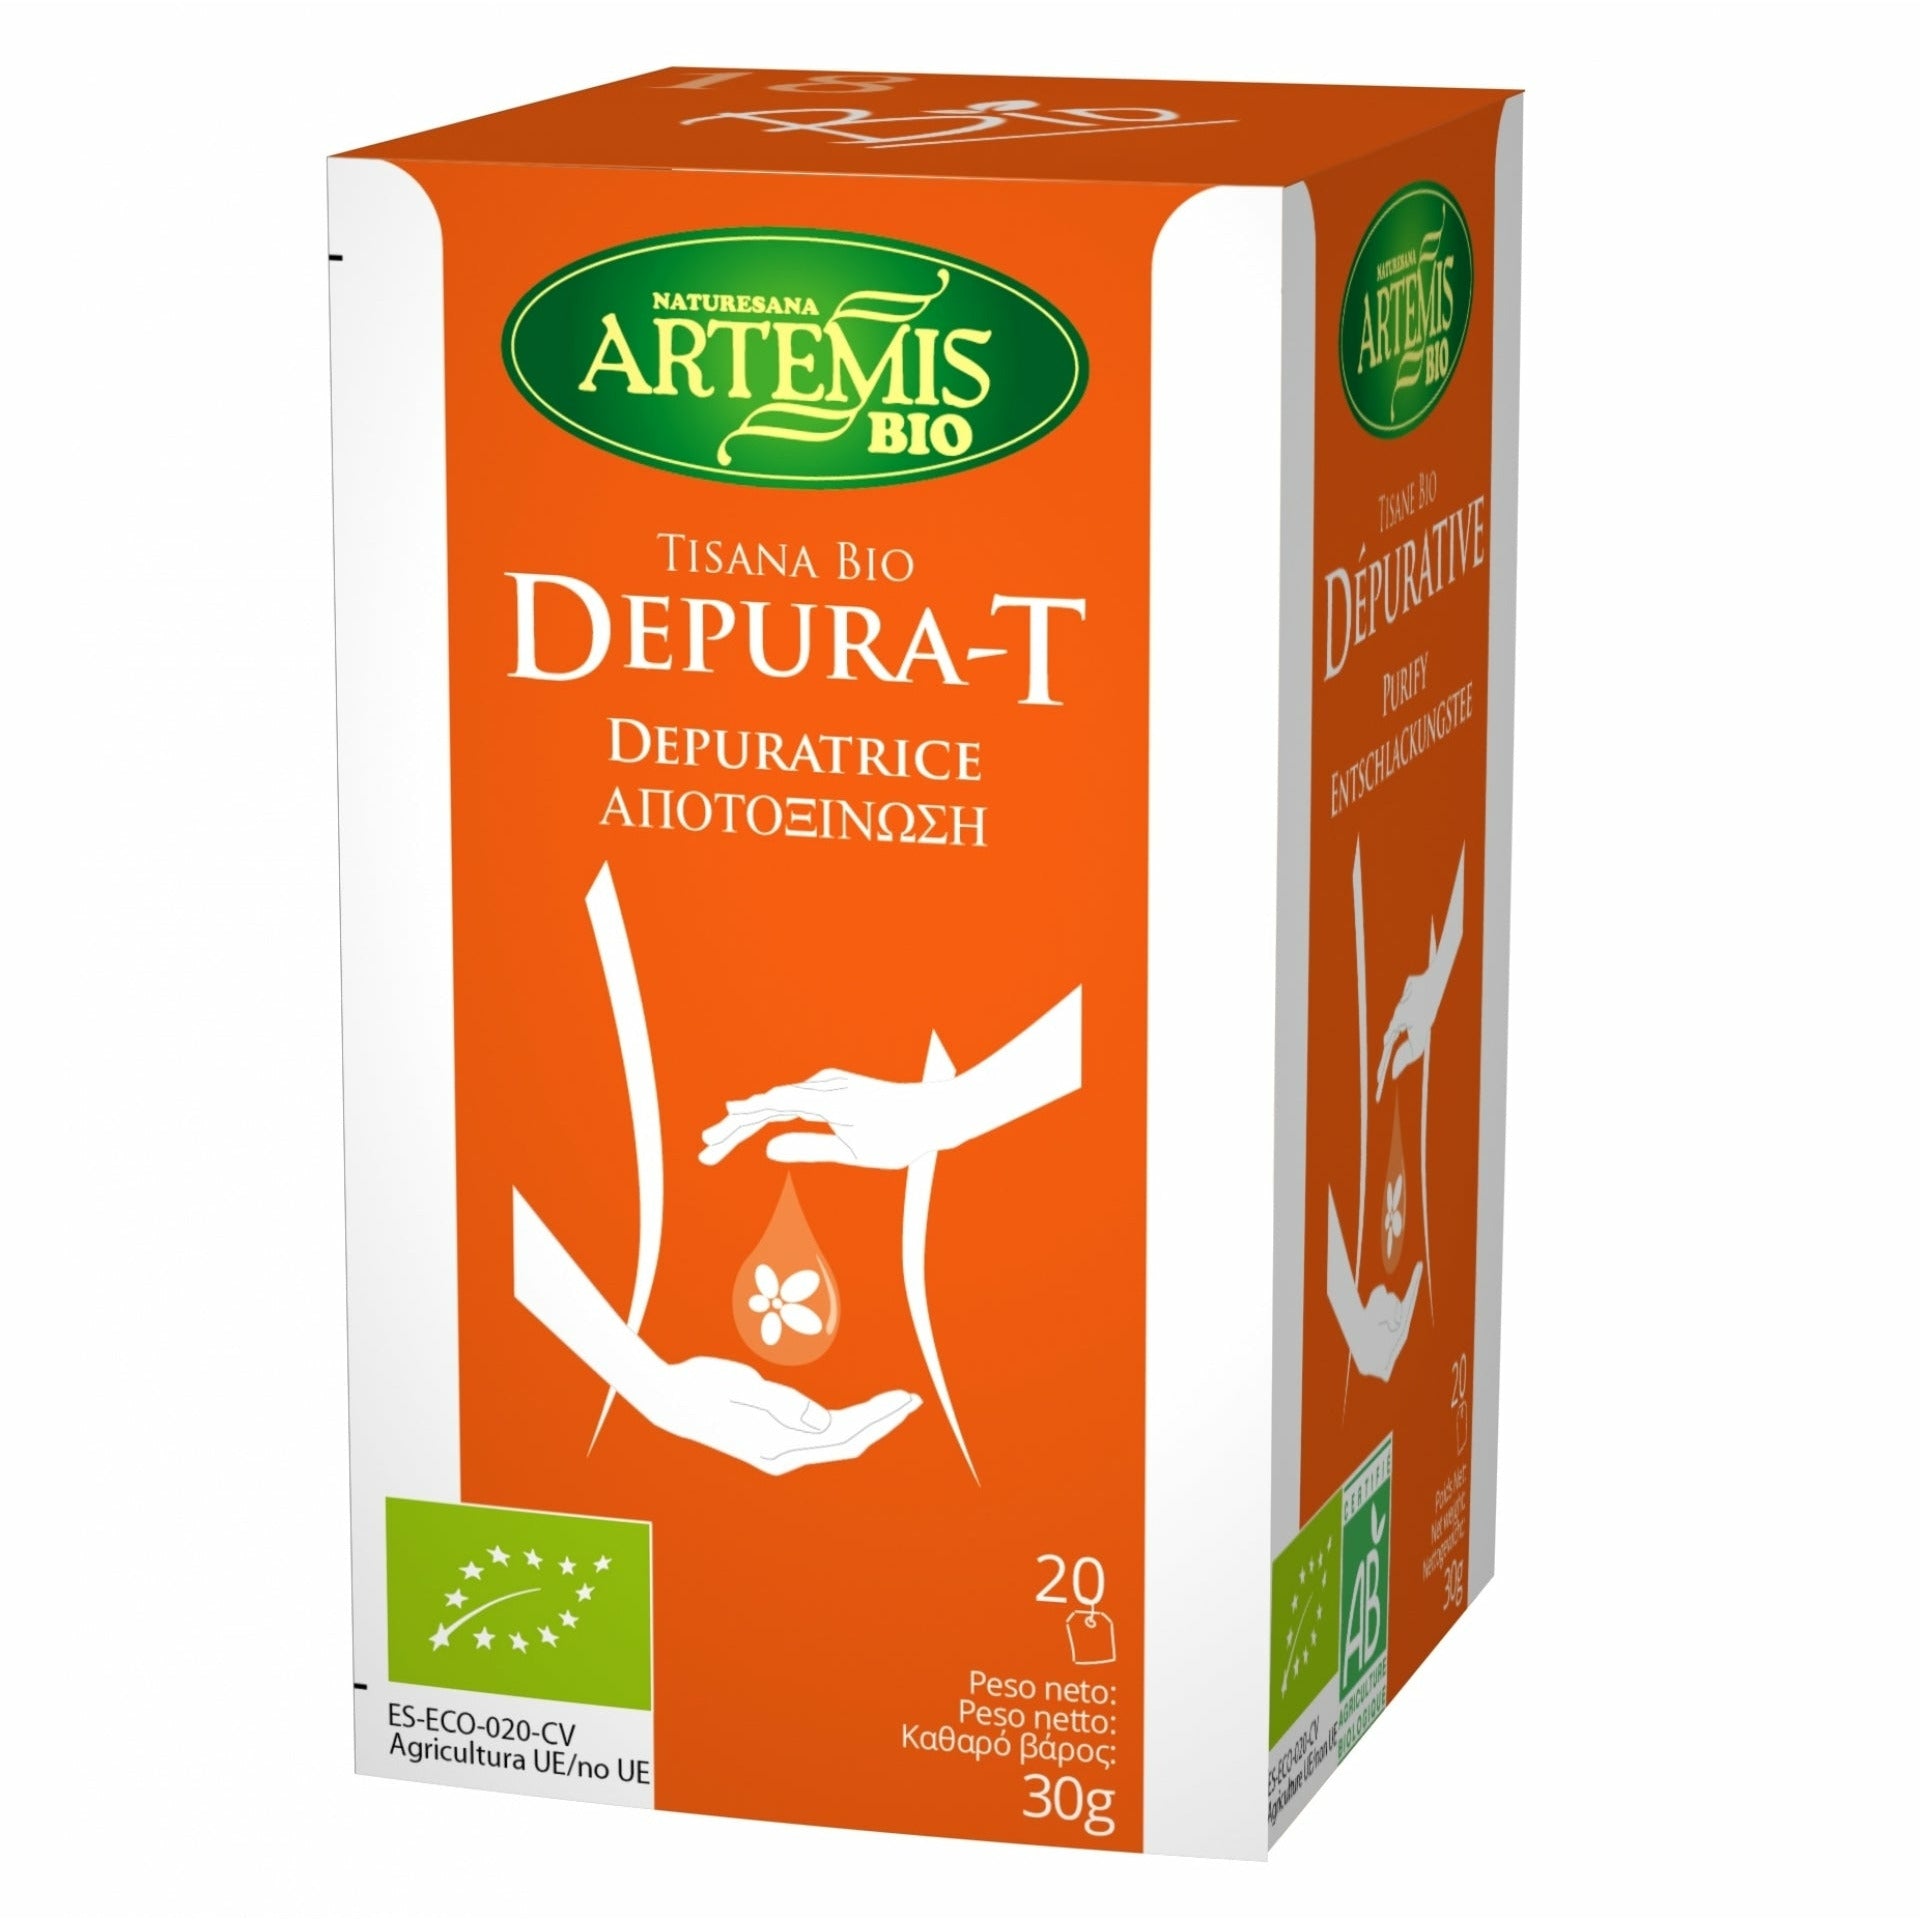 Artemis-Bio-Depura-T-20-Filtros-Biopharmacia,-Parafarmacia-online